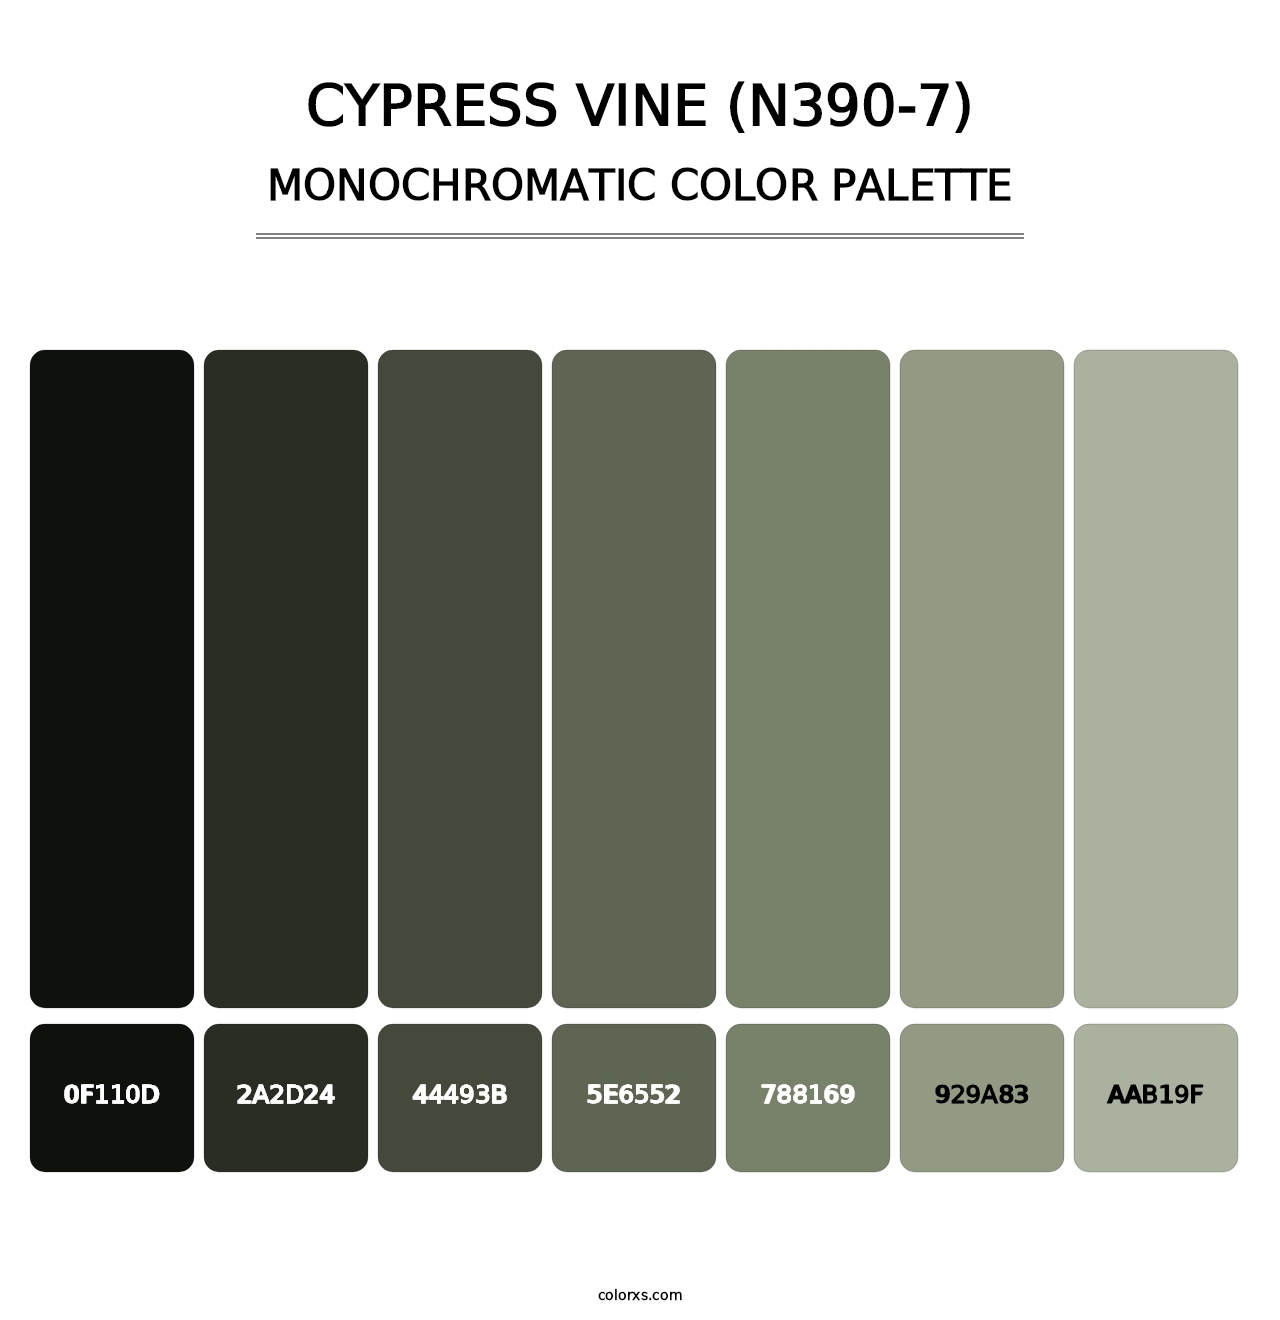 Cypress Vine (N390-7) - Monochromatic Color Palette